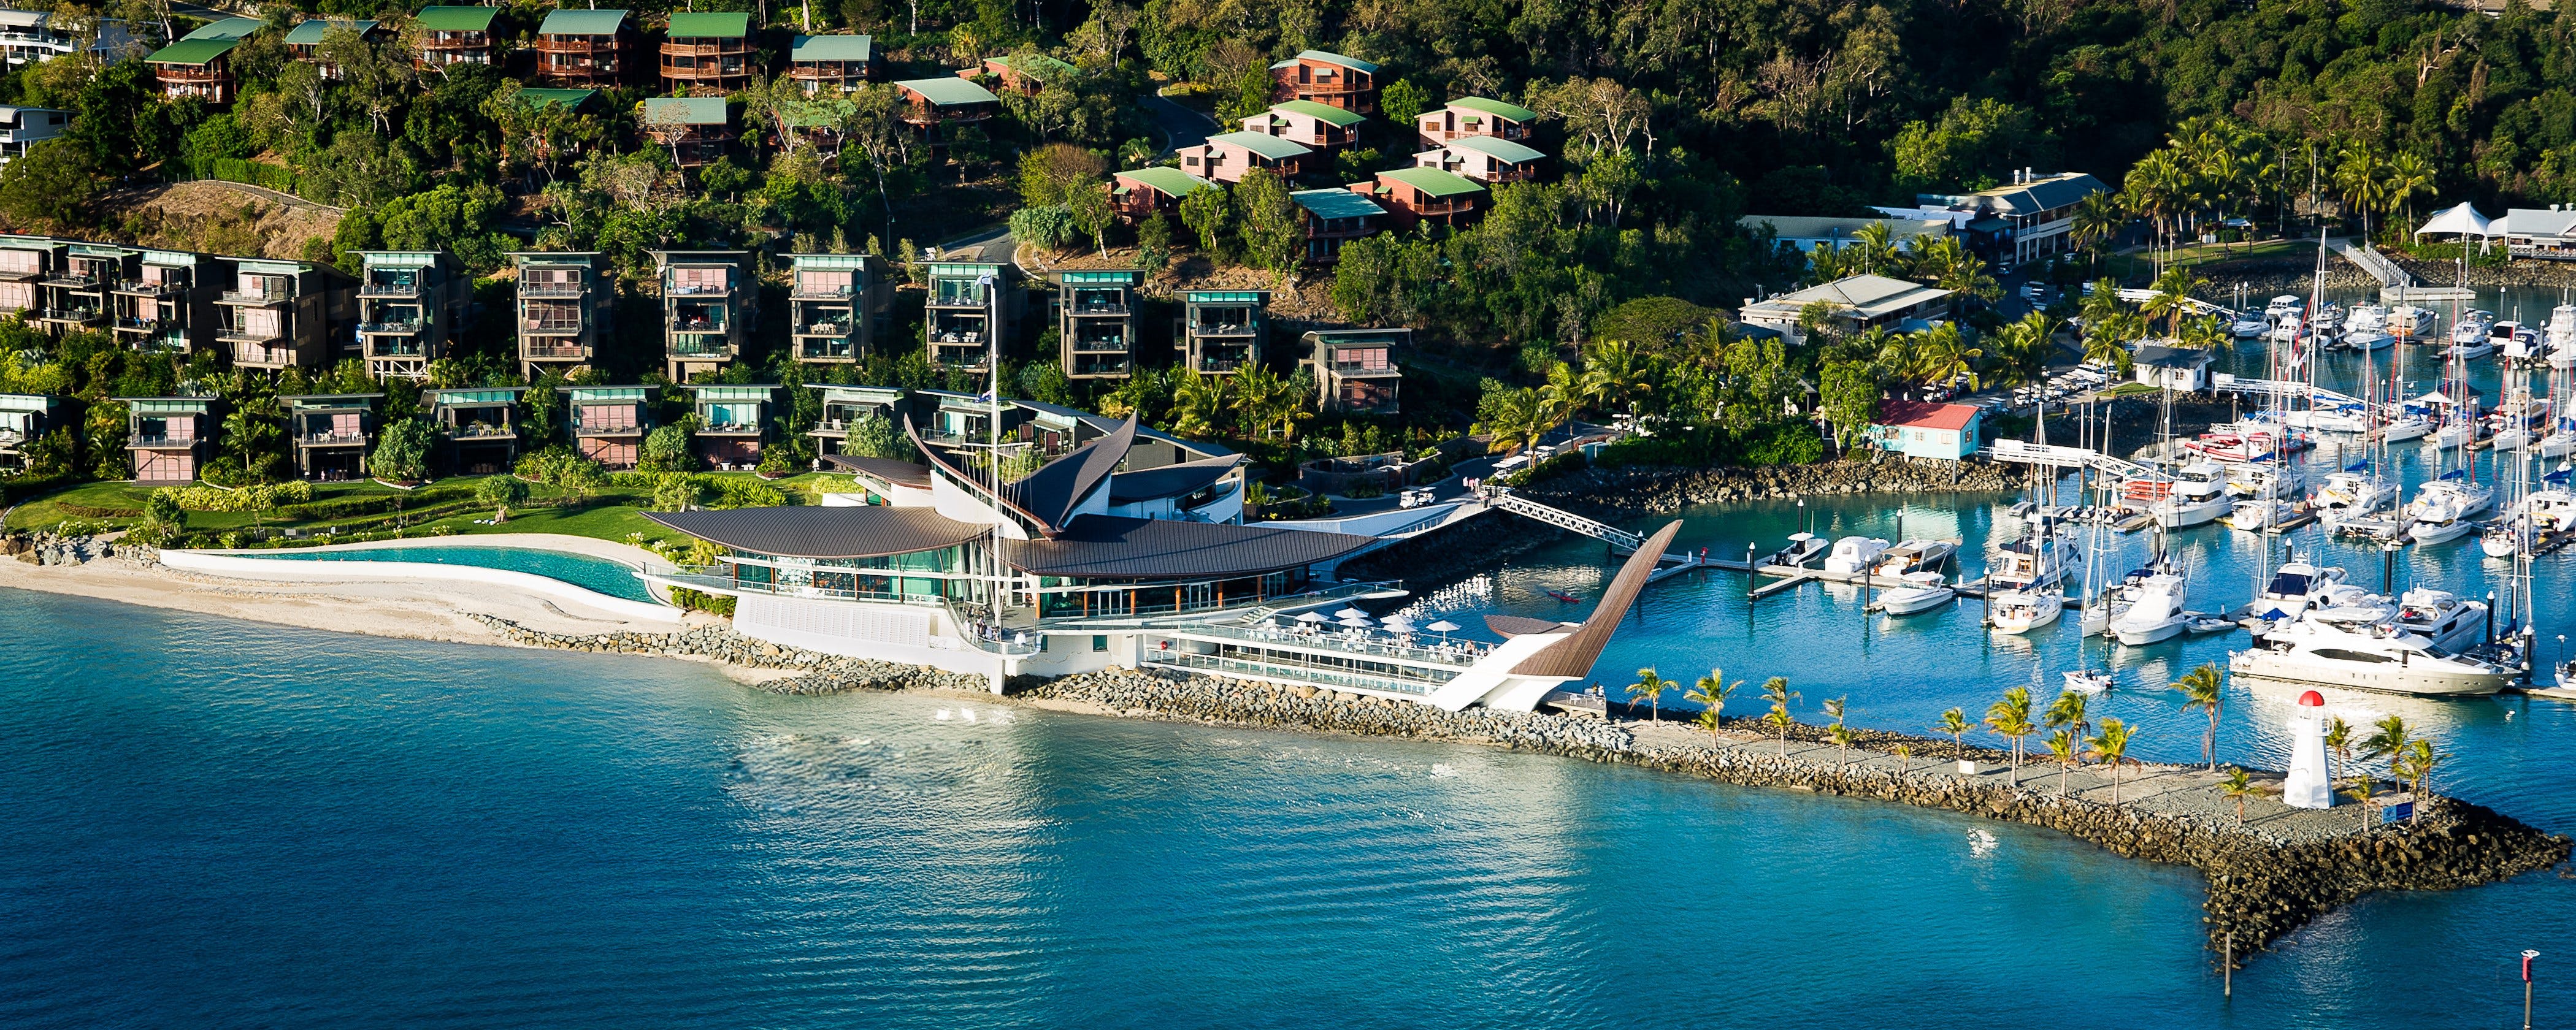 Hamilton Island Yacht Club - Attractions